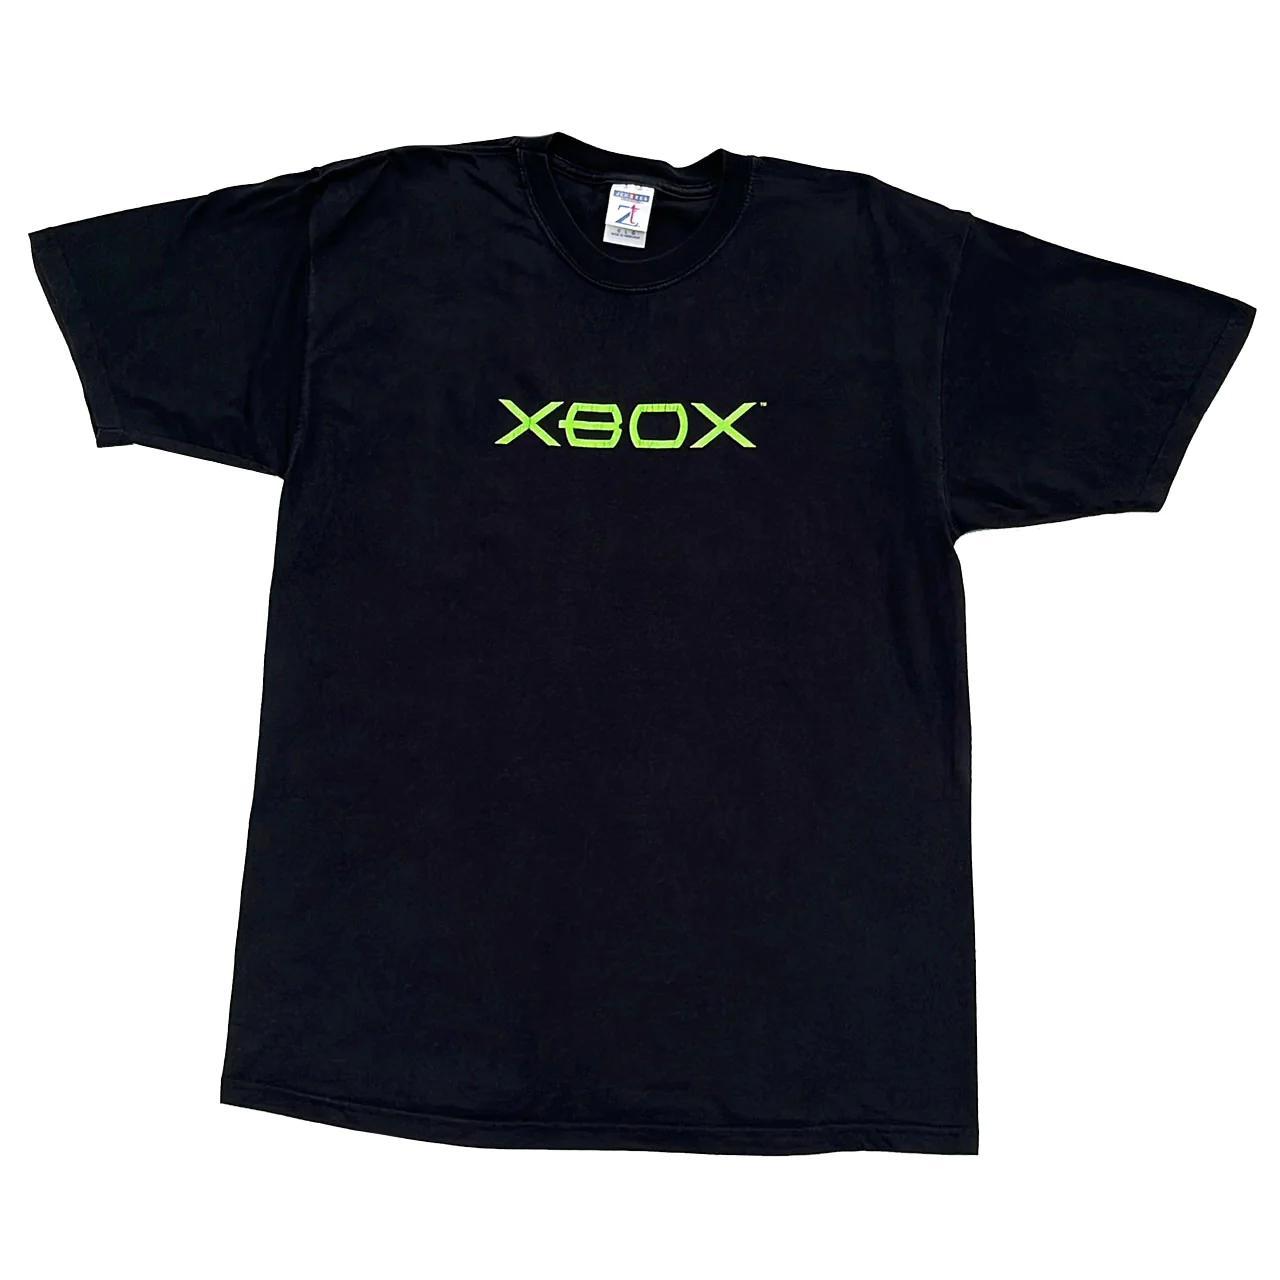 Original 2000's XBOX promo vintage t-shirt, in black... - Depop